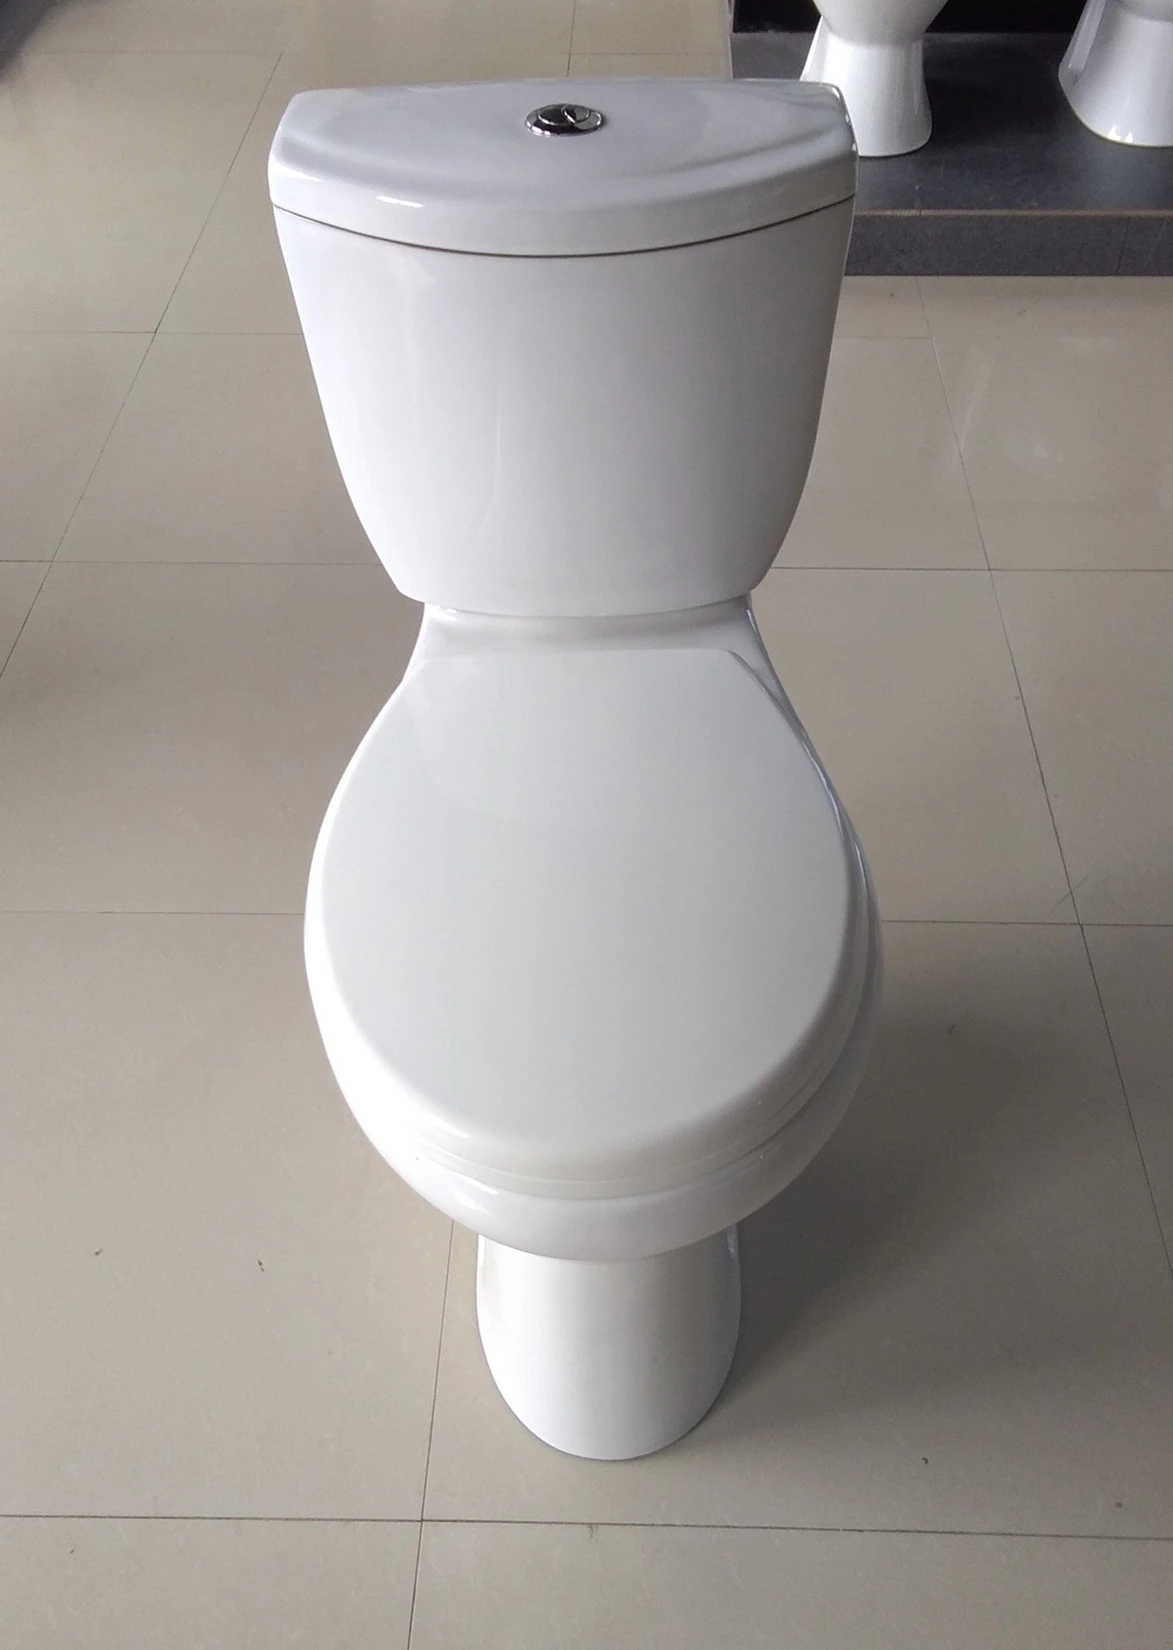 Comfort height 470mm elderly P-TRAP ada two piece handicap disabled toilet